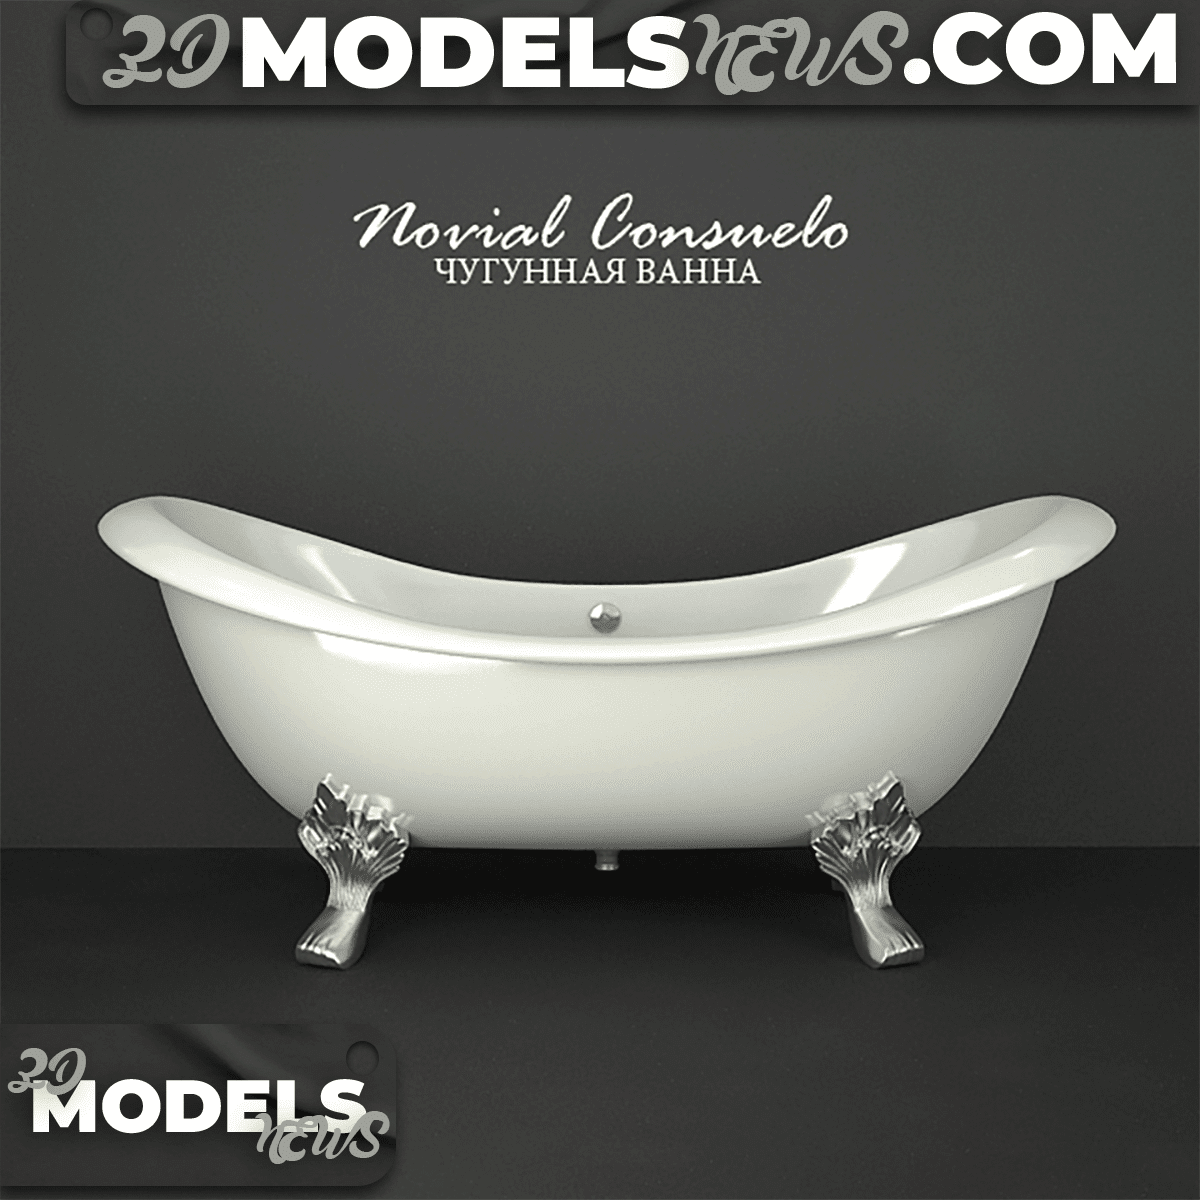 Bathtub Model Novial Consuelo 1